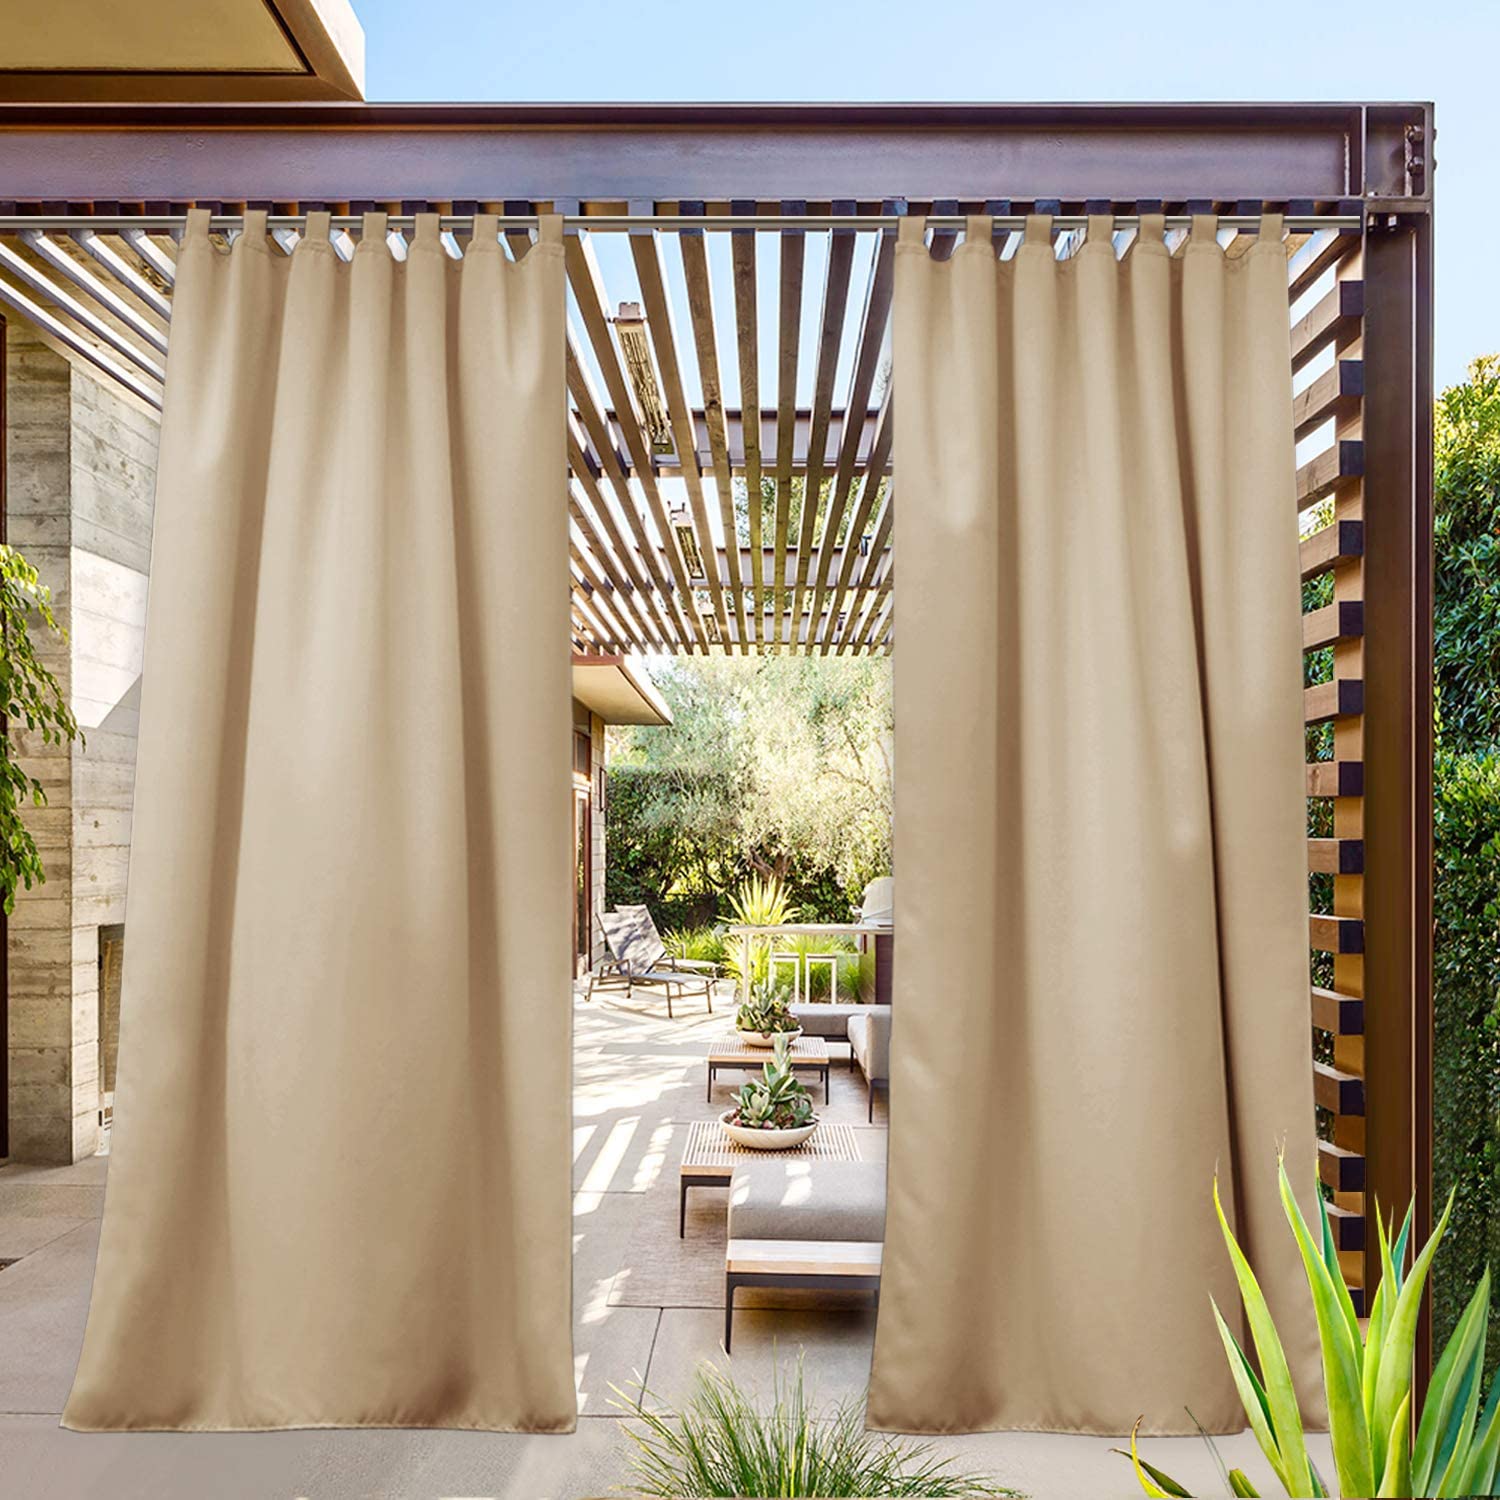 Nicetown Tab Top Outdoor Curtain For Patio Waterproof W52 X L108 Triple Weave